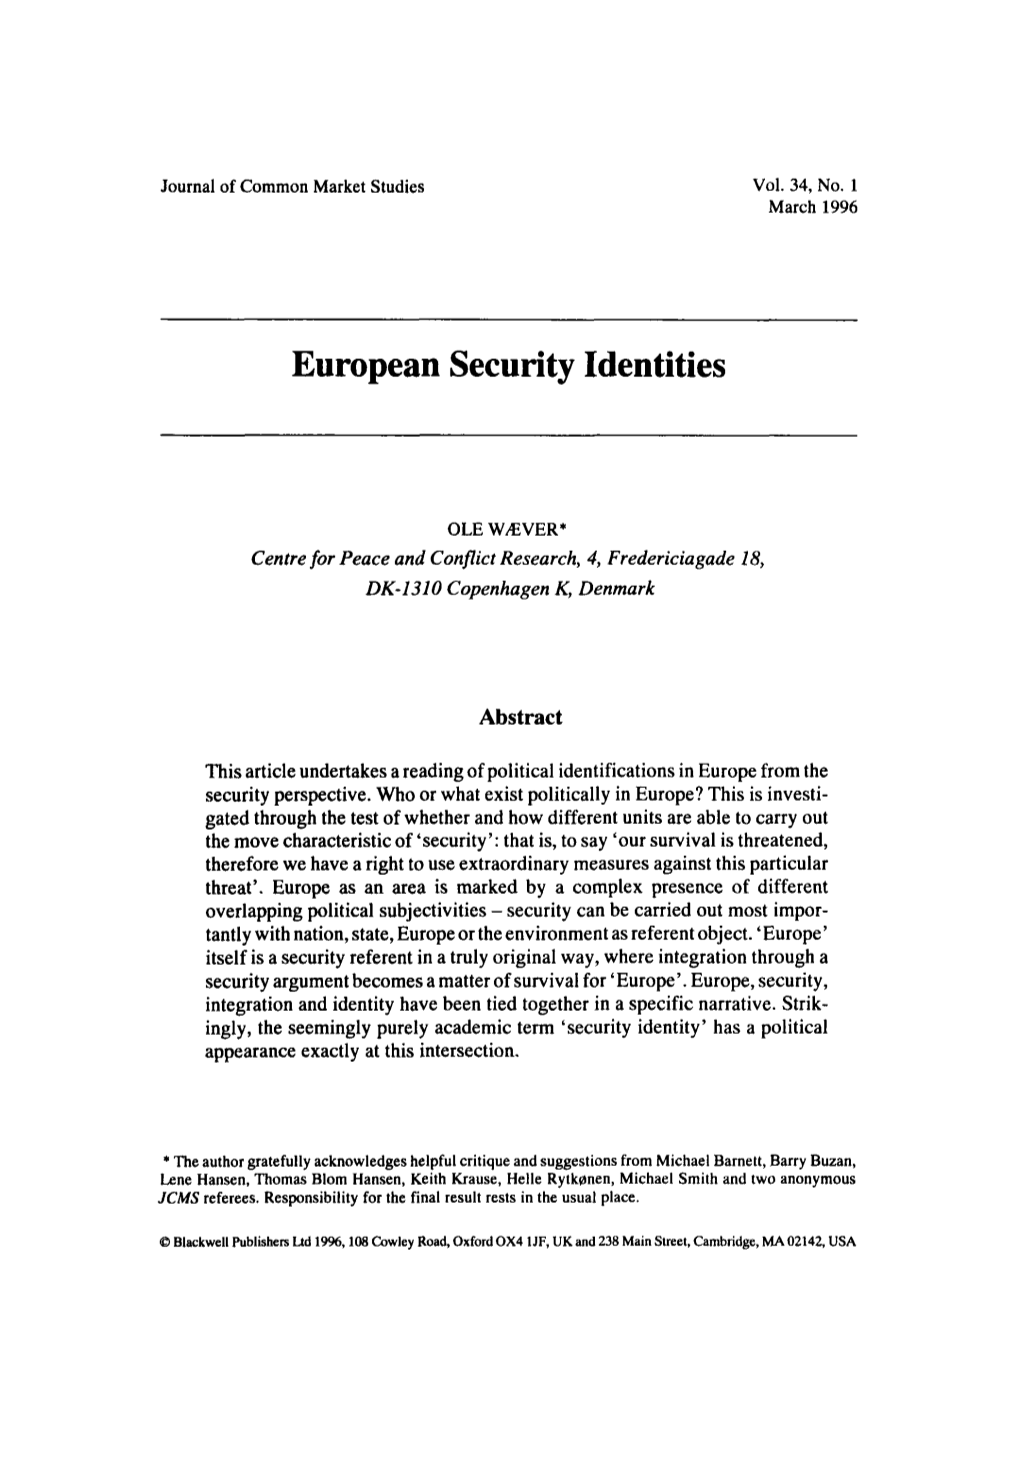 European Security Identities